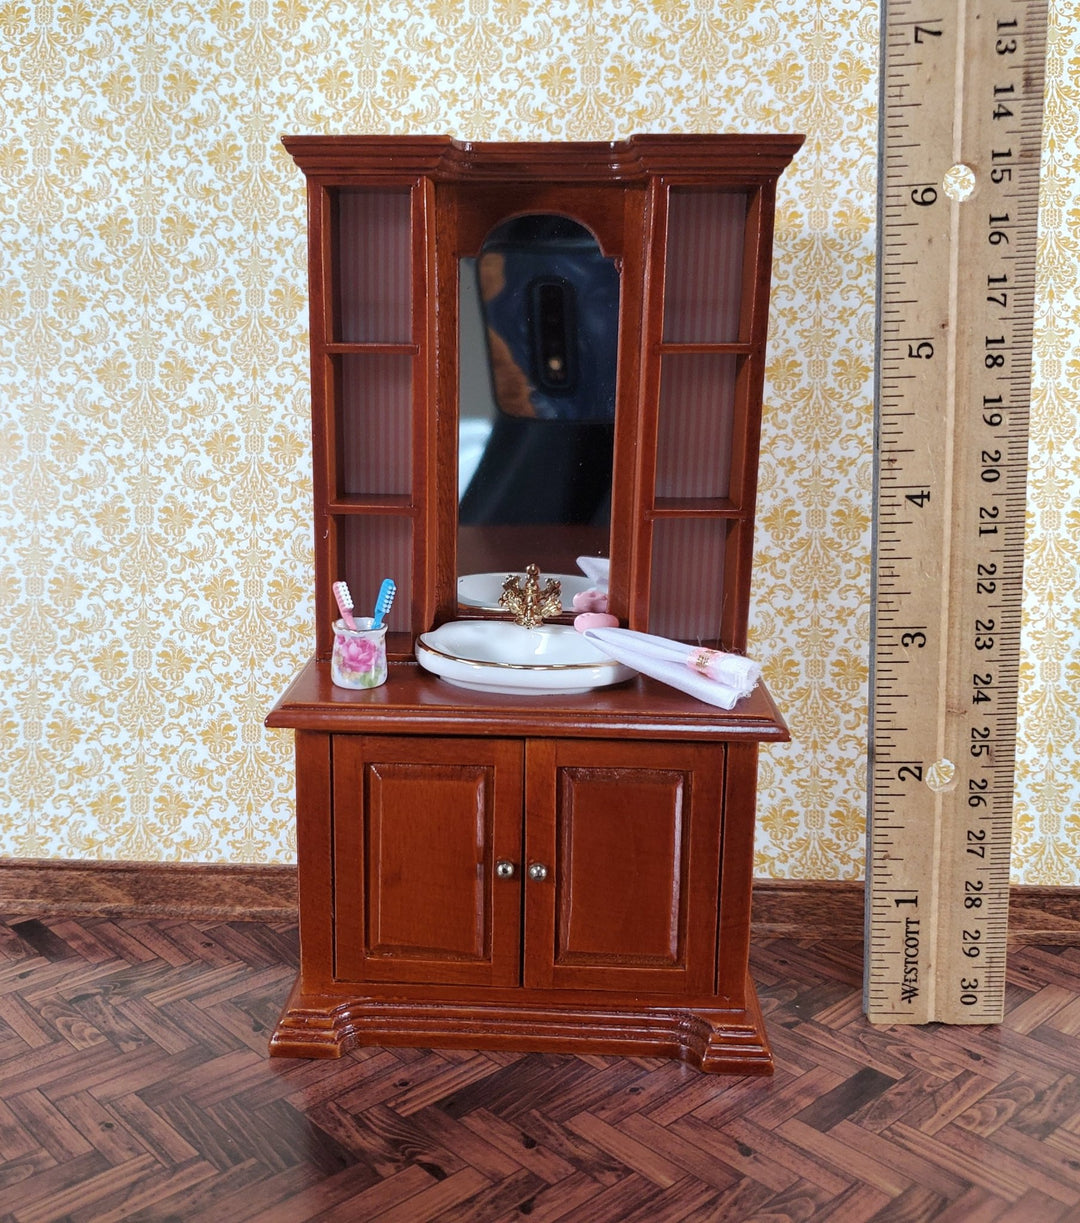 Dollhouse Reutter Tall Bathroom Sink Cabinet Walnut Finish 1:12 Scale Miniature - Miniature Crush